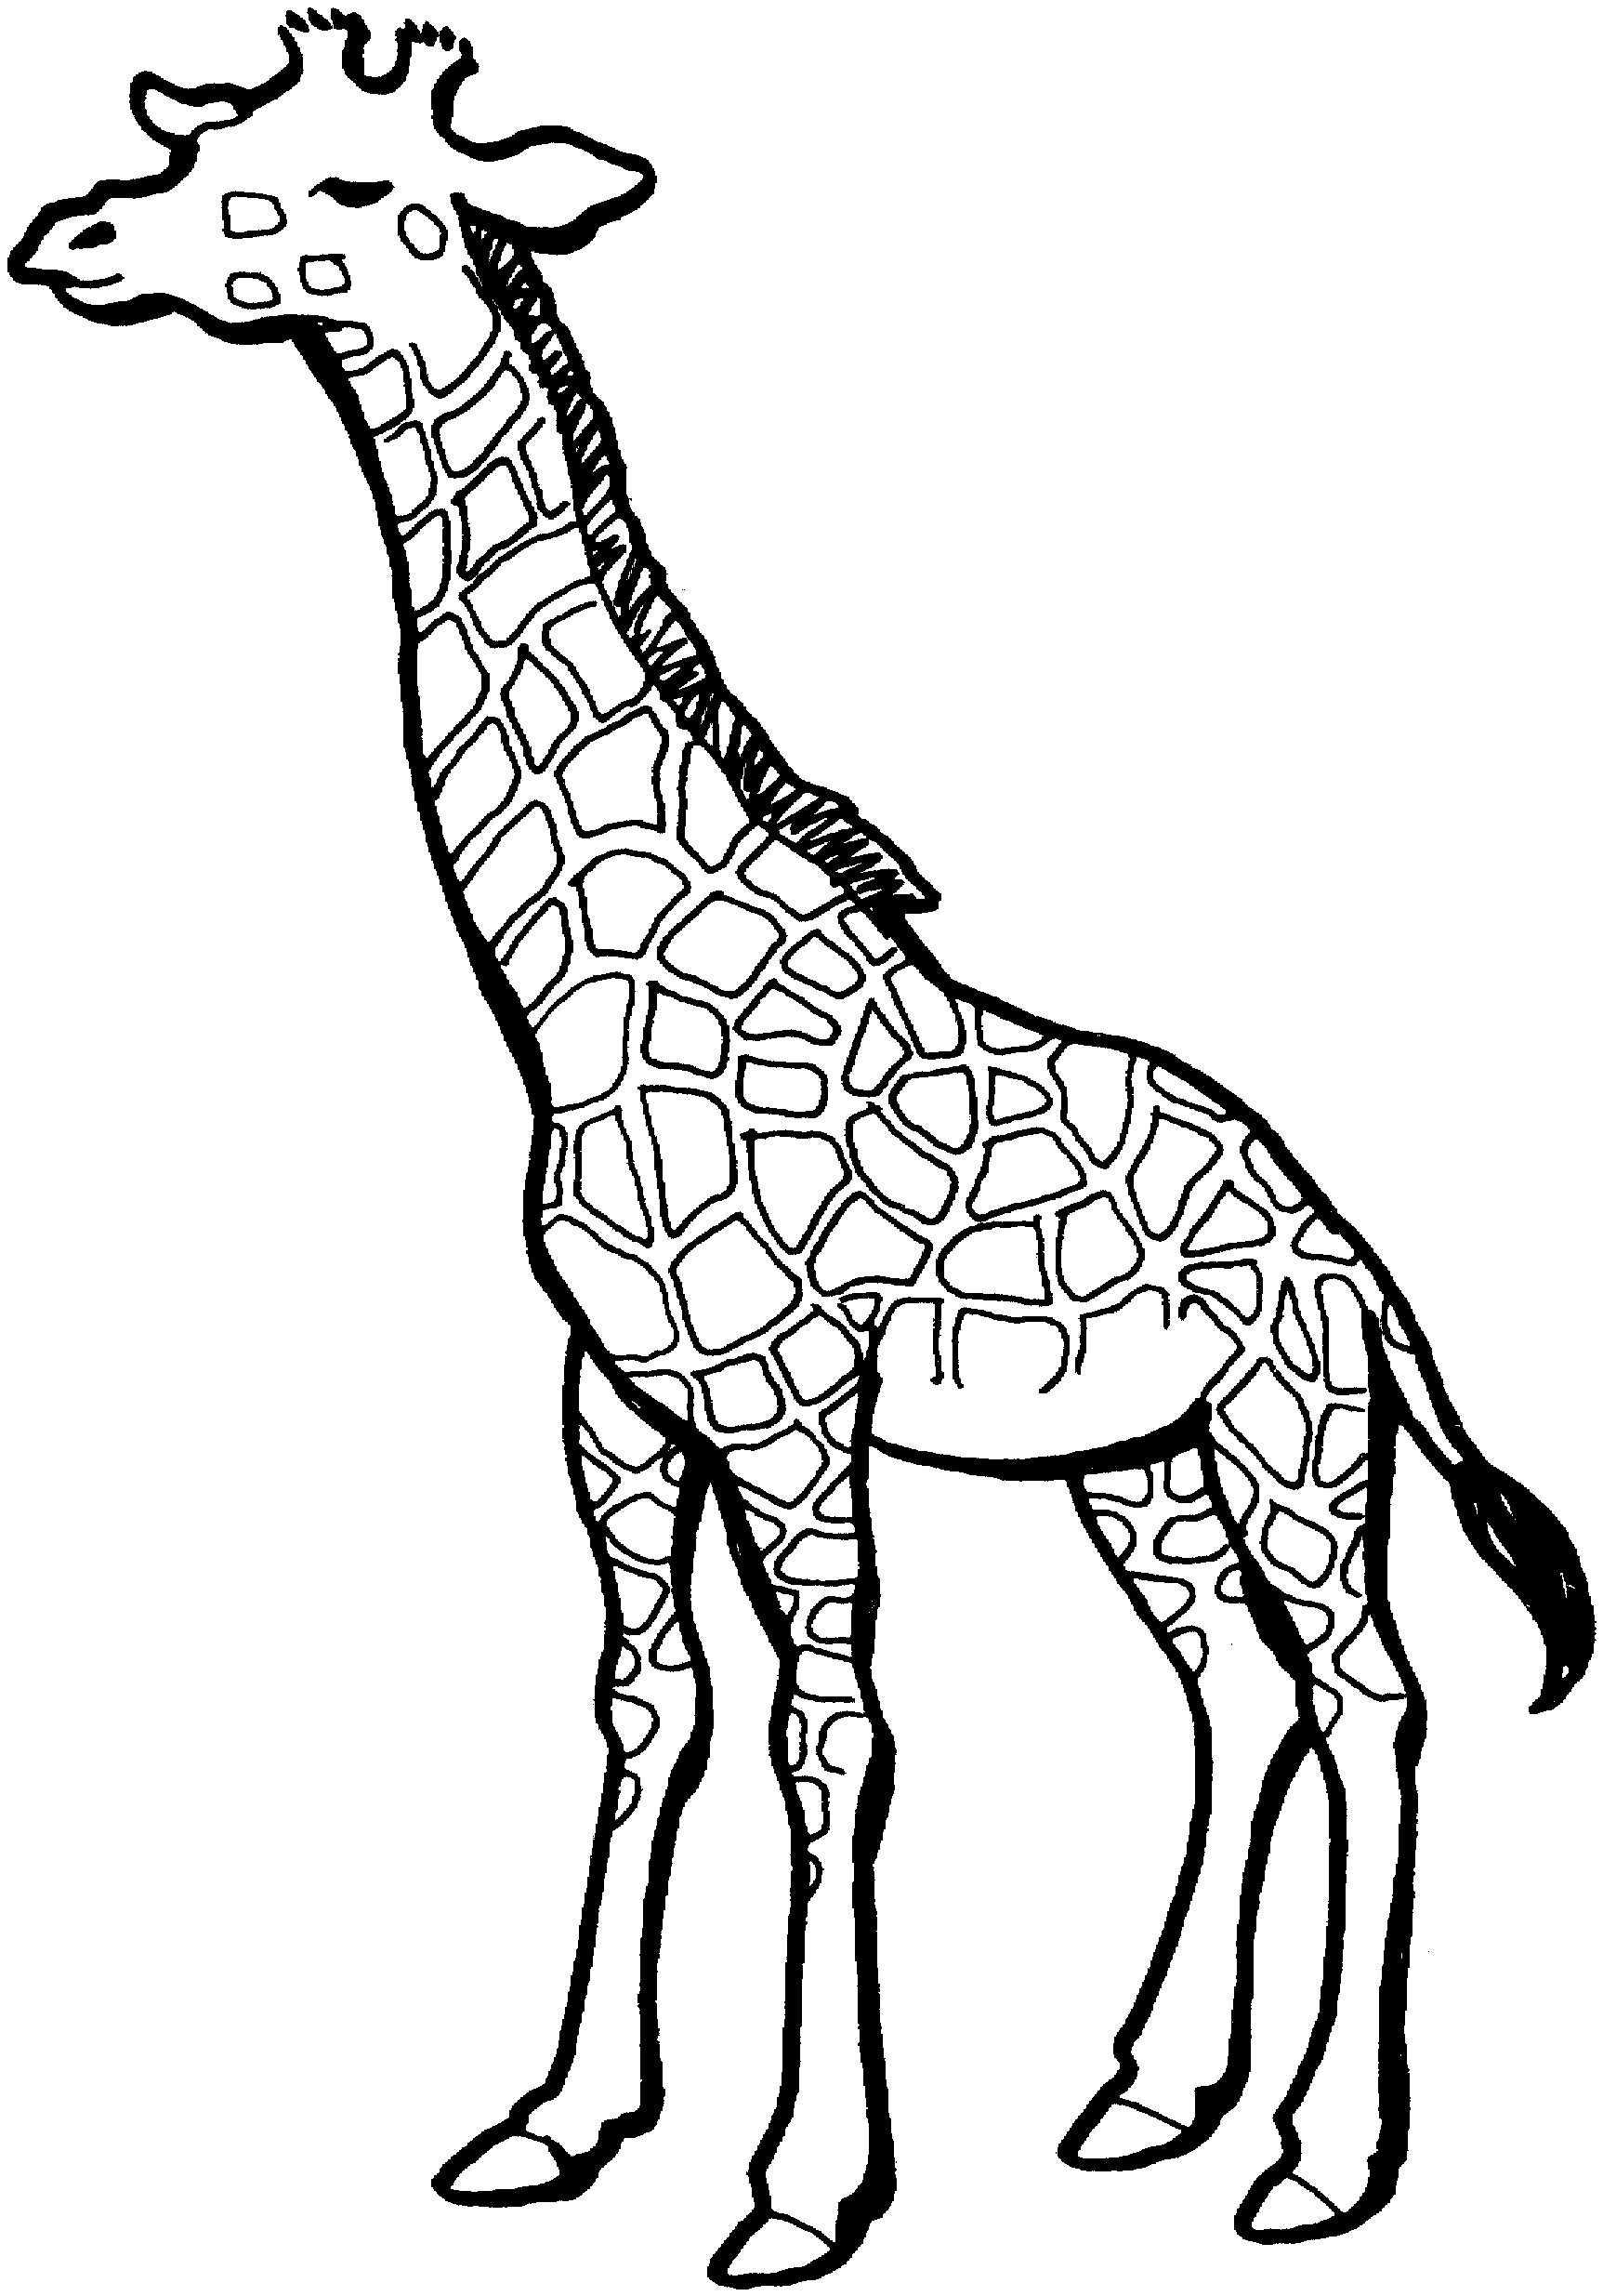 Clipart giraffe outline. Free cliparts download clip